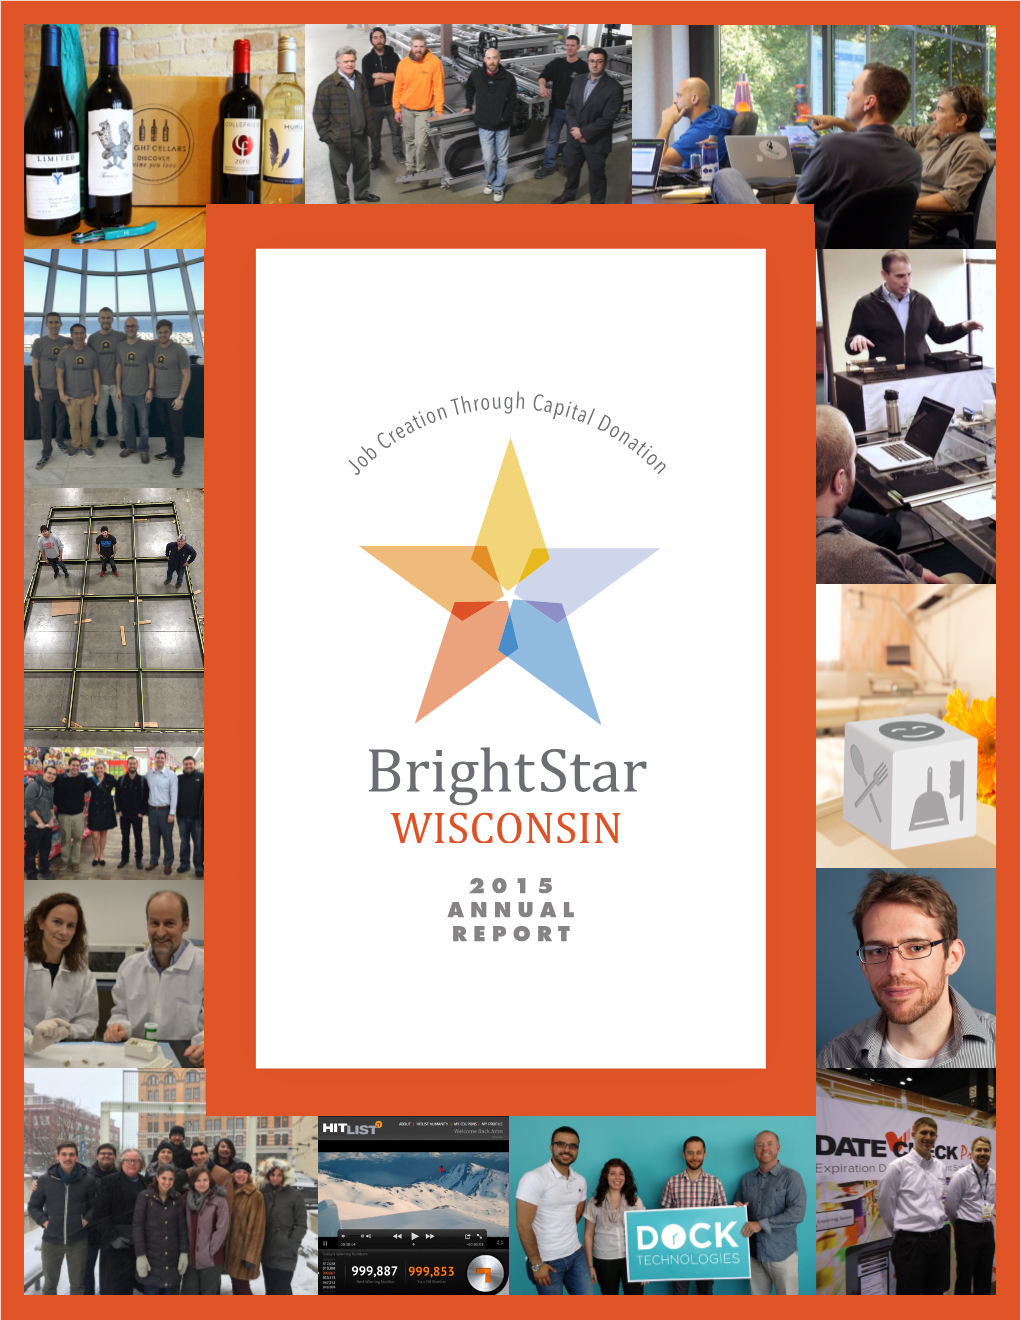 Brightstar Wisconsin 2015 Annual Report